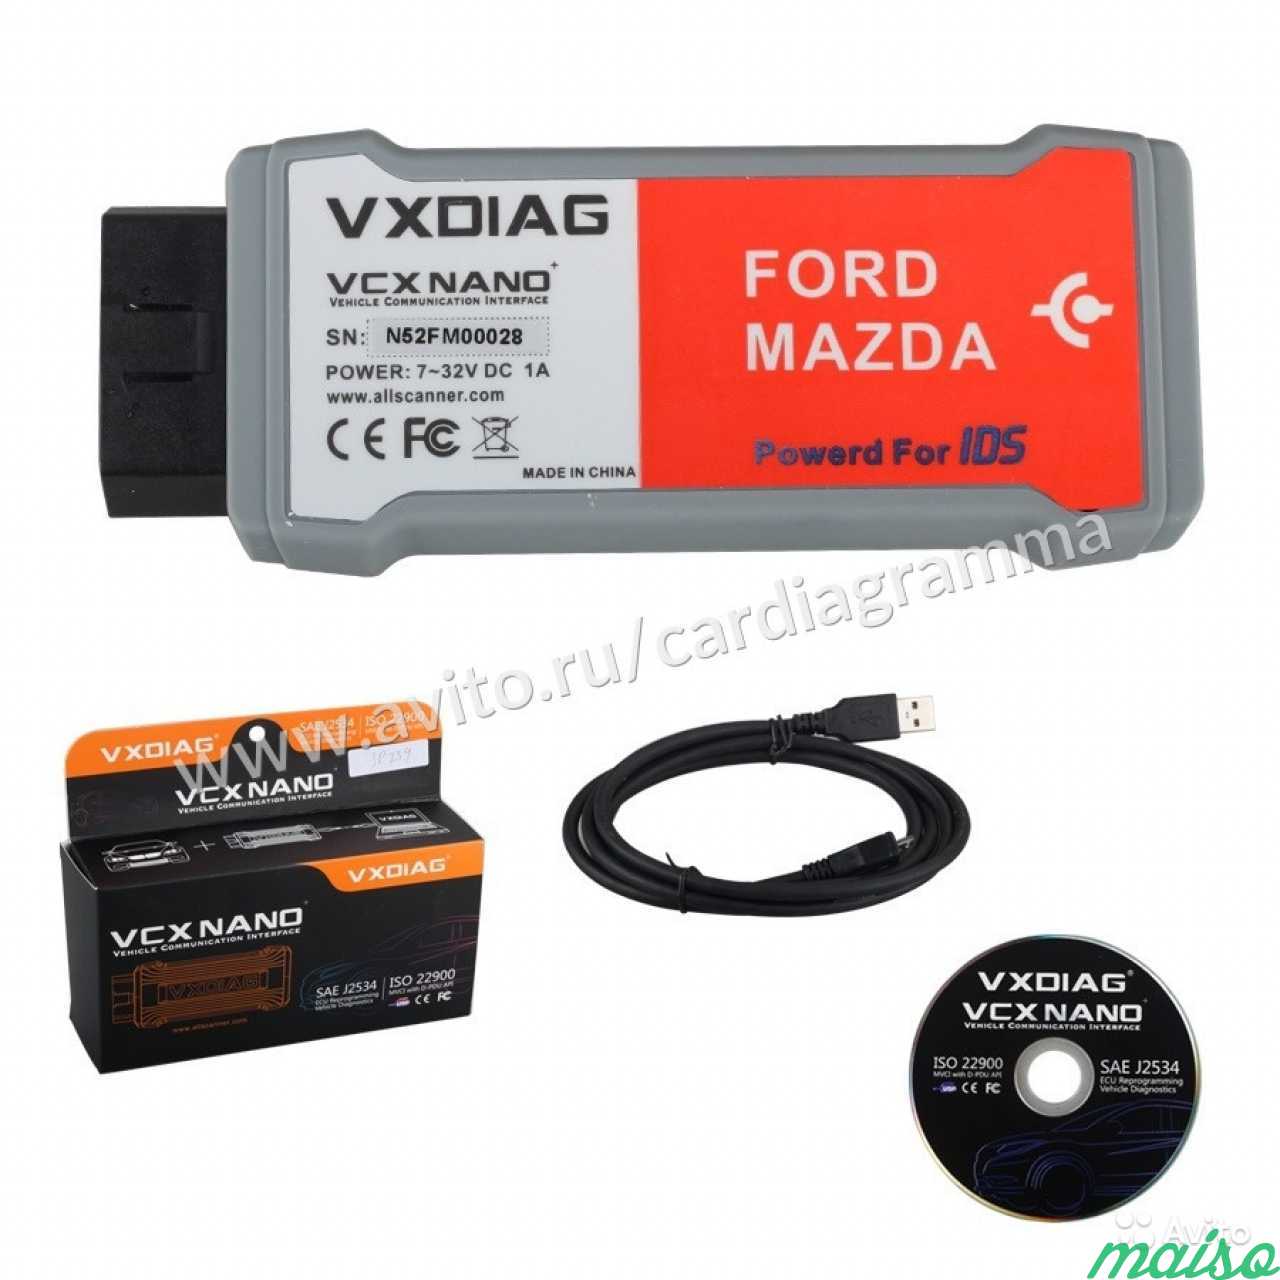 Дилерский сканер vxdiag для Ford/Mazda 2 в 1 Wi-Fi в Санкт-Петербурге. Фото 1